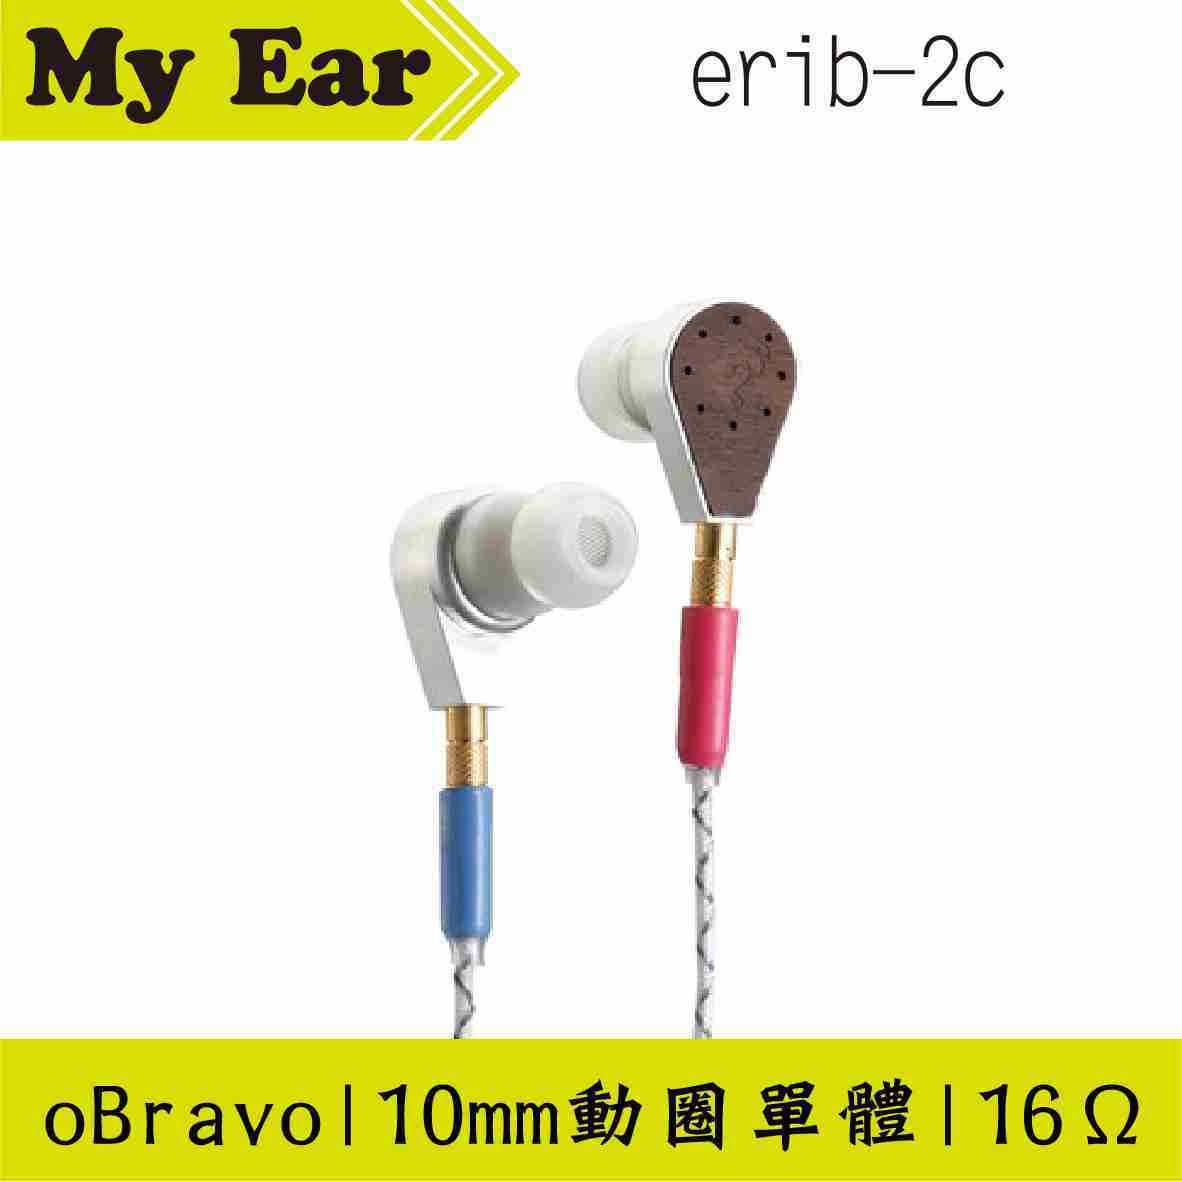 oBravo erib-2c 平面振膜 耳道式耳機 | My Ear耳機專門店